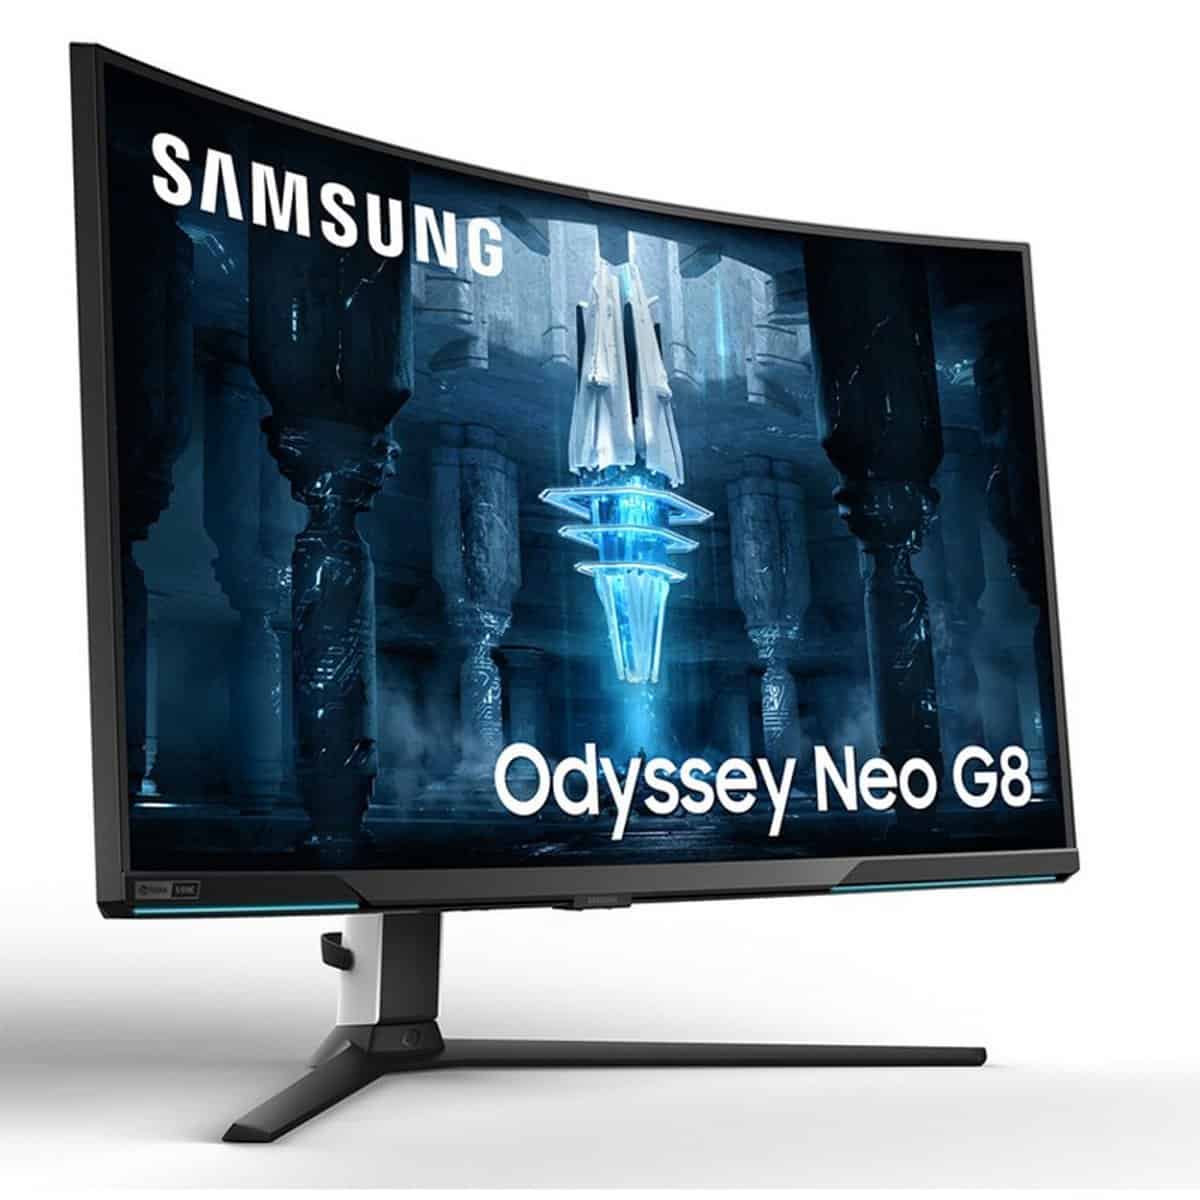 Samsung finally launch Odyssey Neo G8 globally